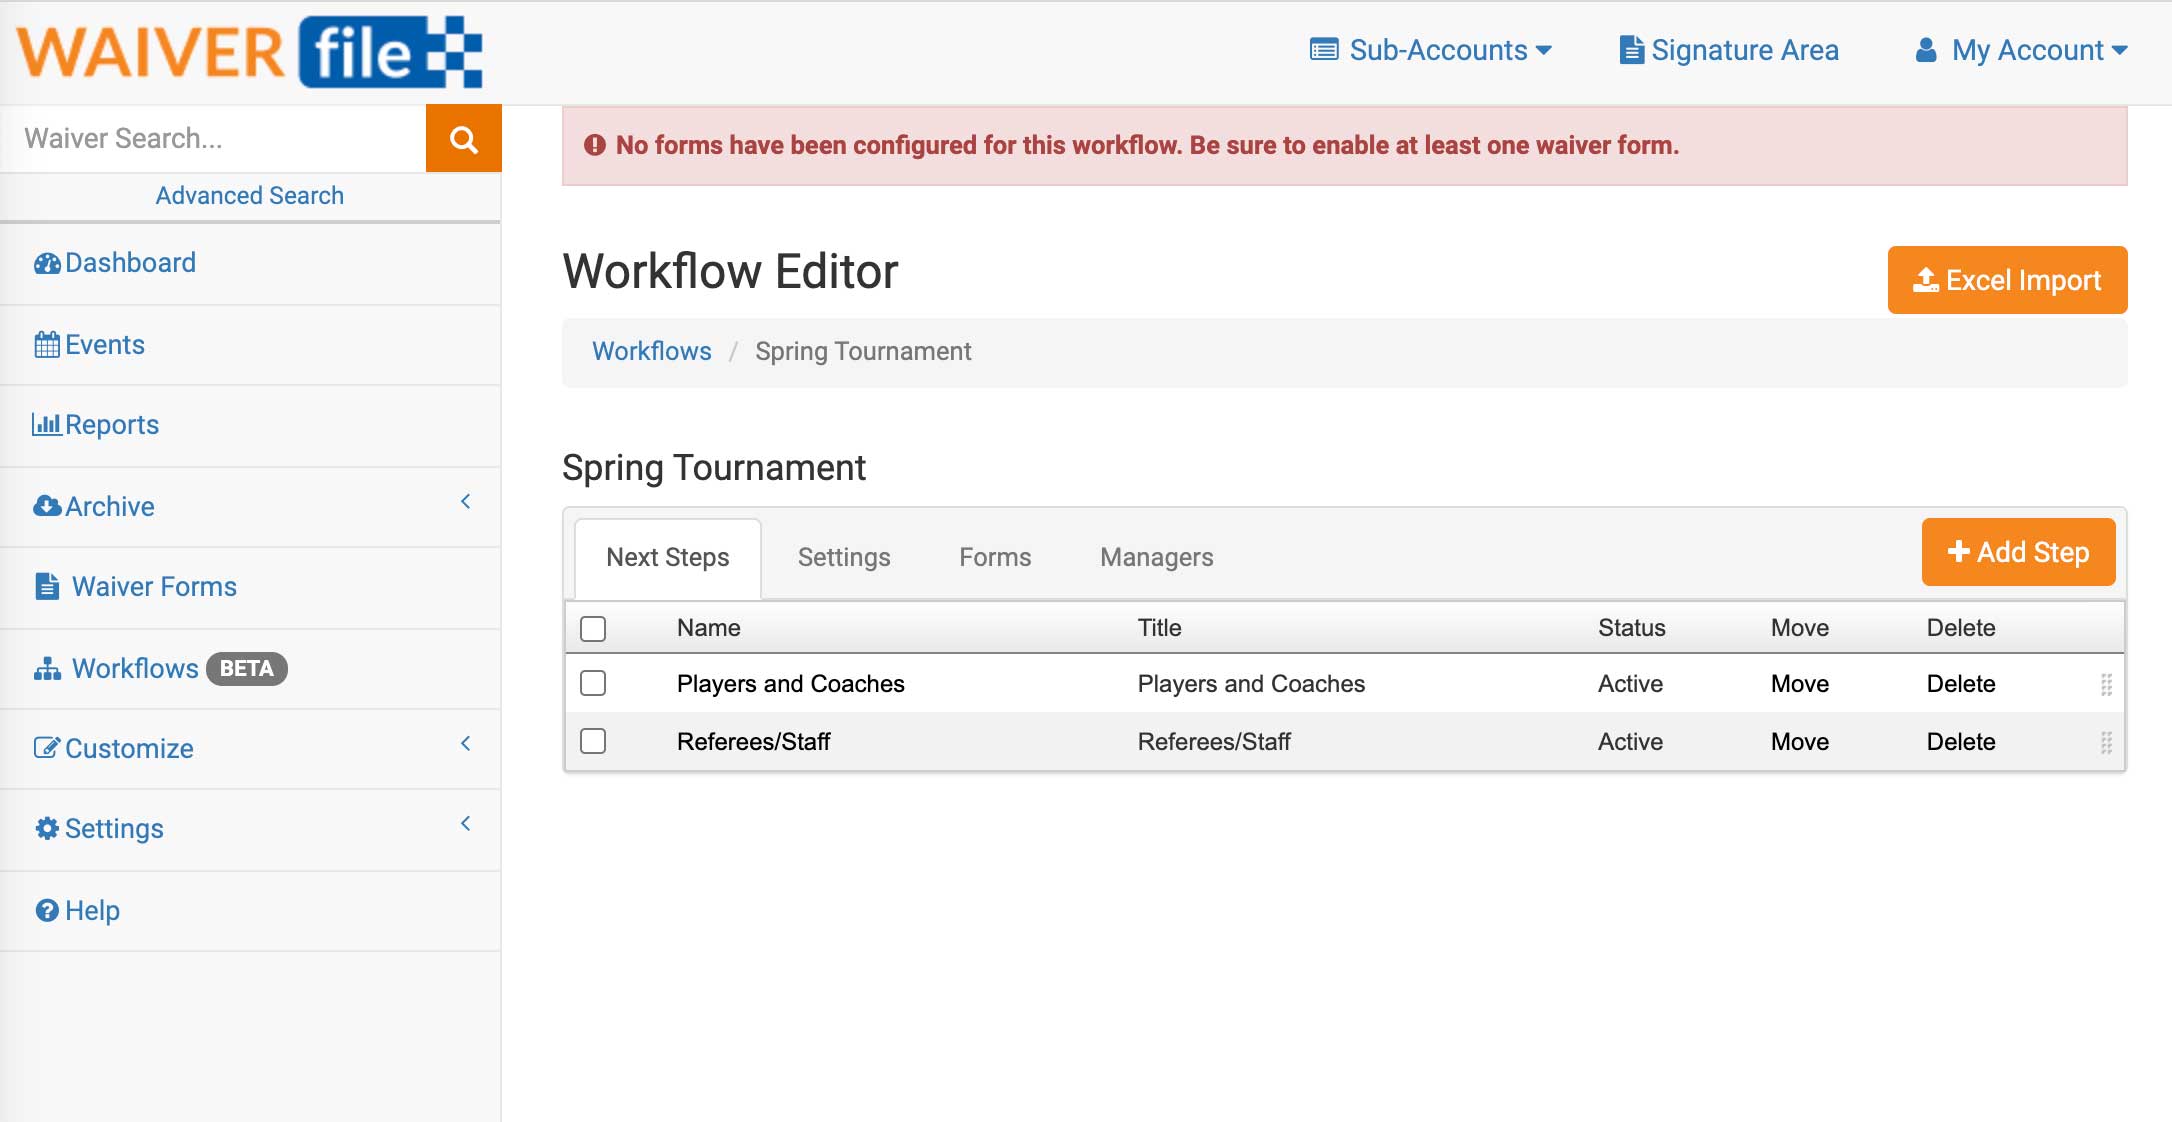 Workflow Editor Next Steps